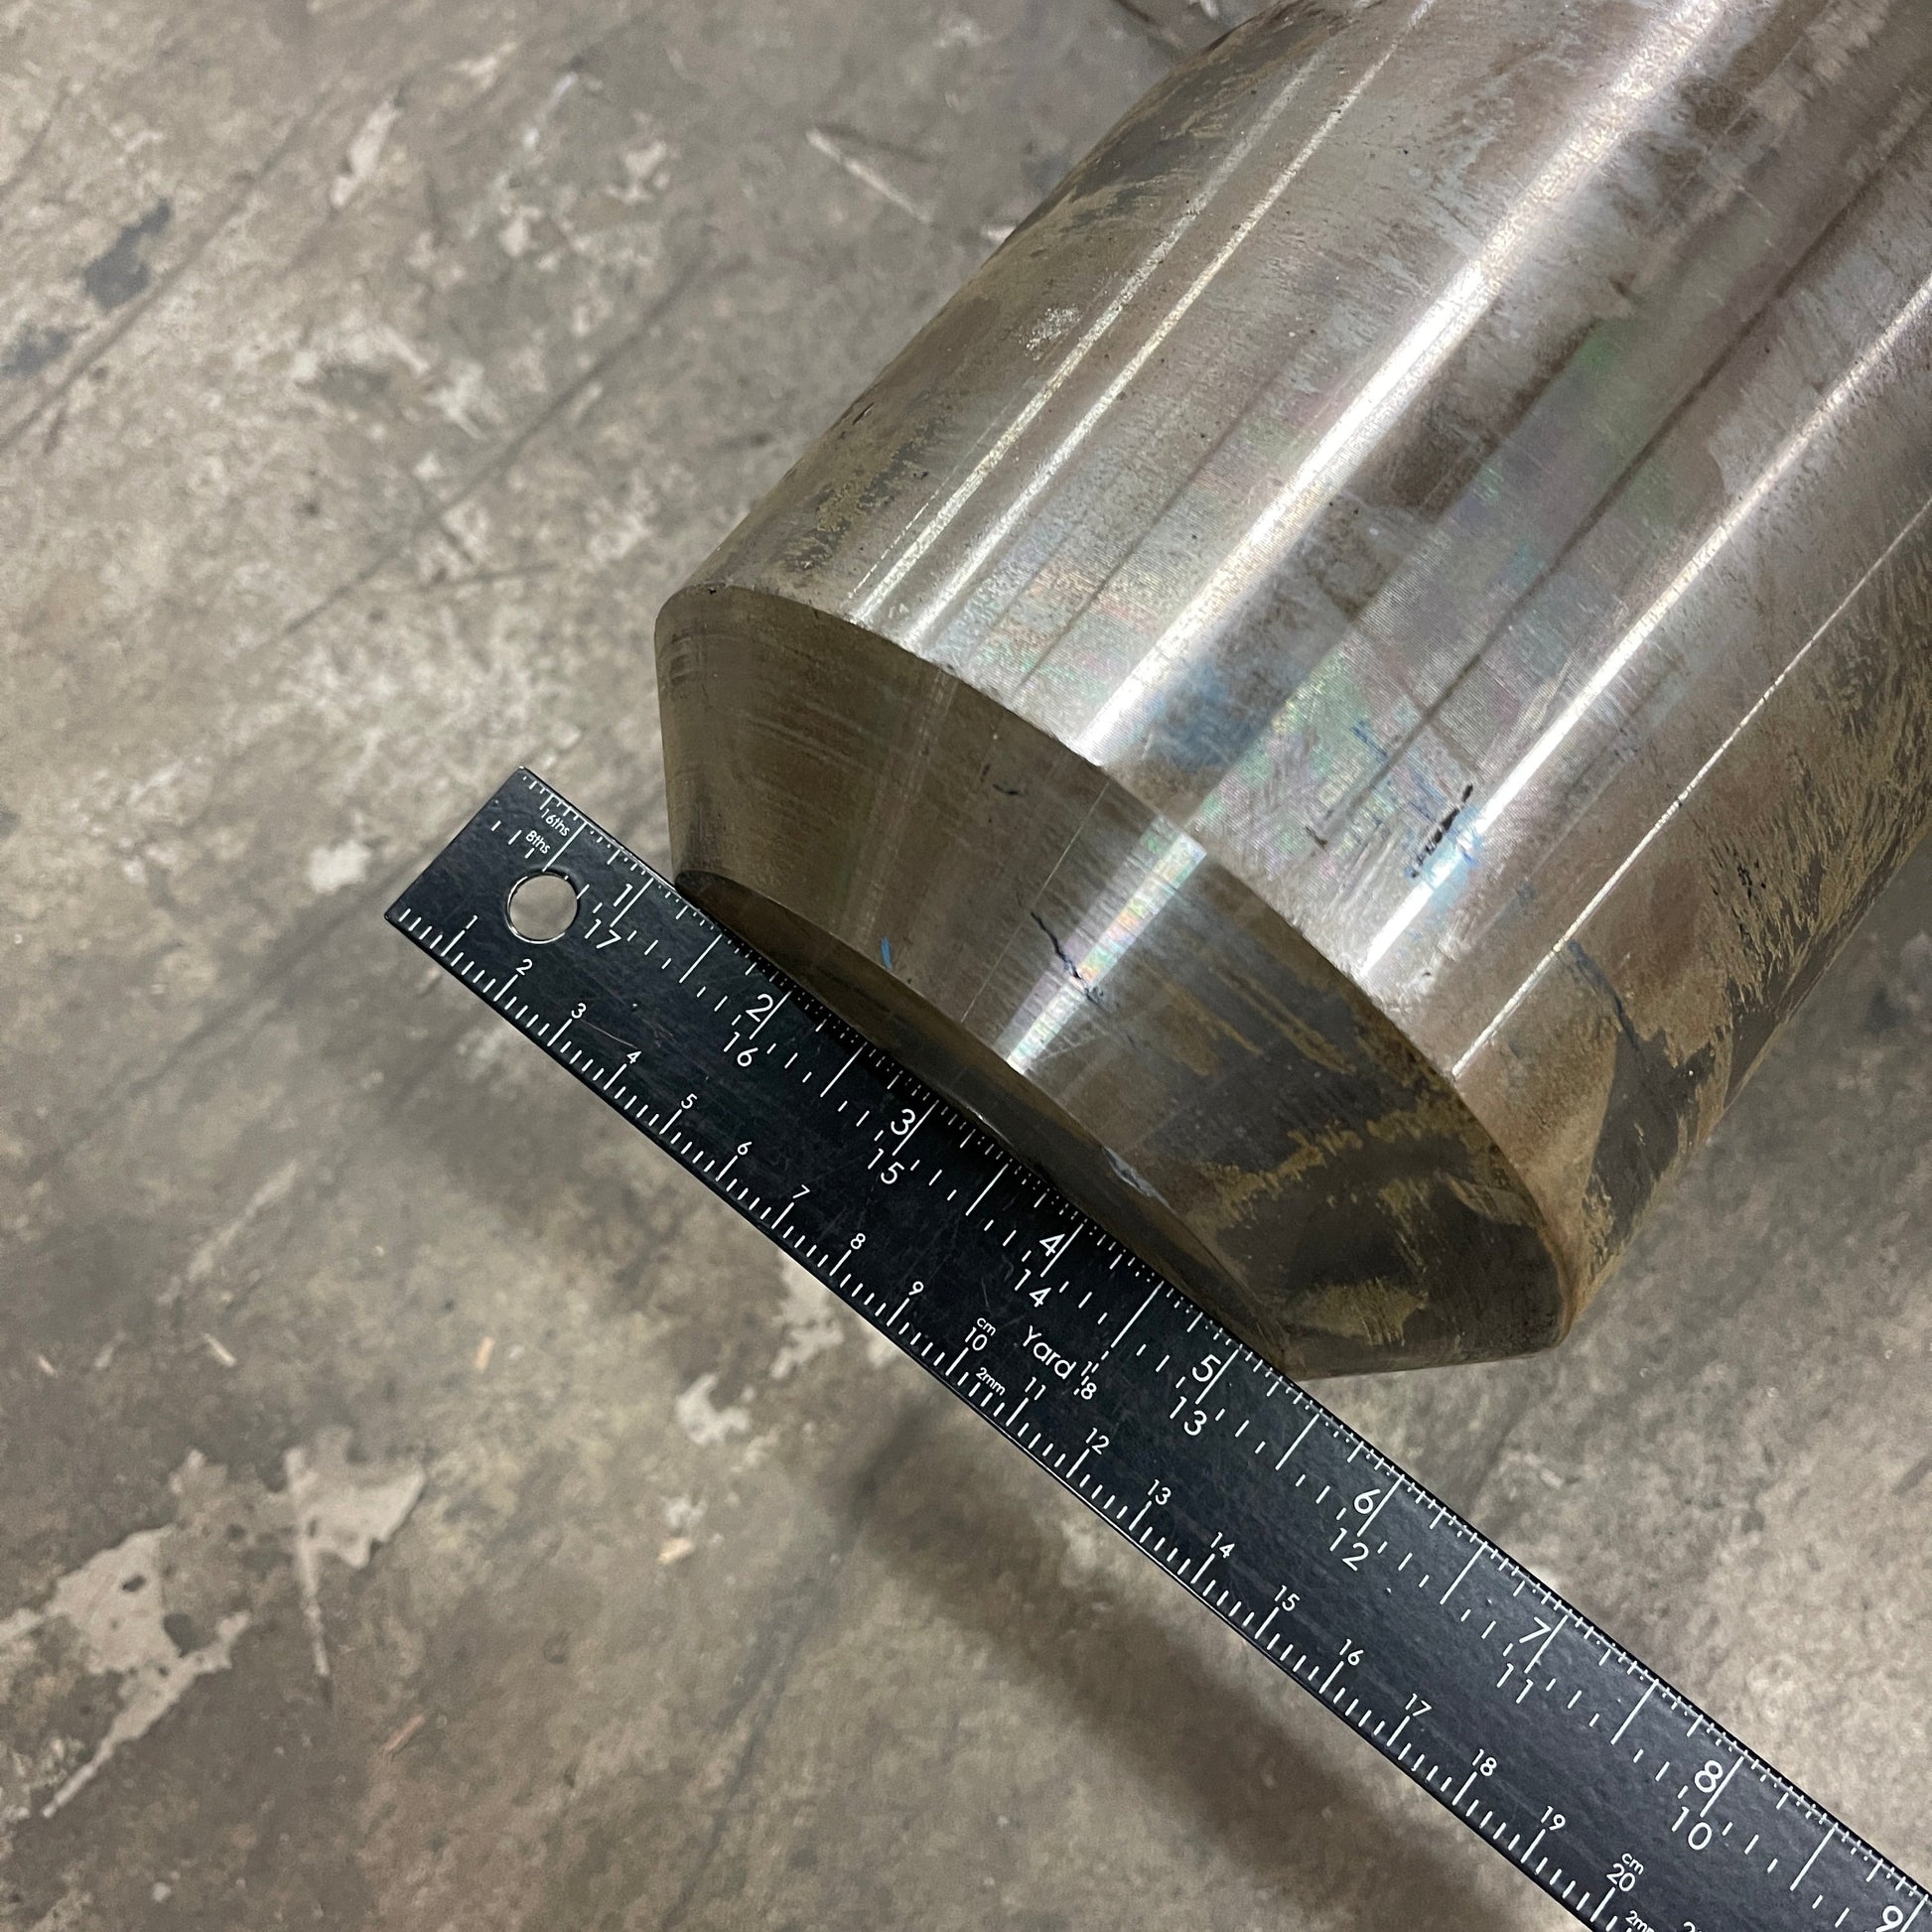 Hydraulic Excavator Steel Hammer Breaker Bit / H-Wedge Chisel Tip 6-1/4" DIA X 91" Long (New)